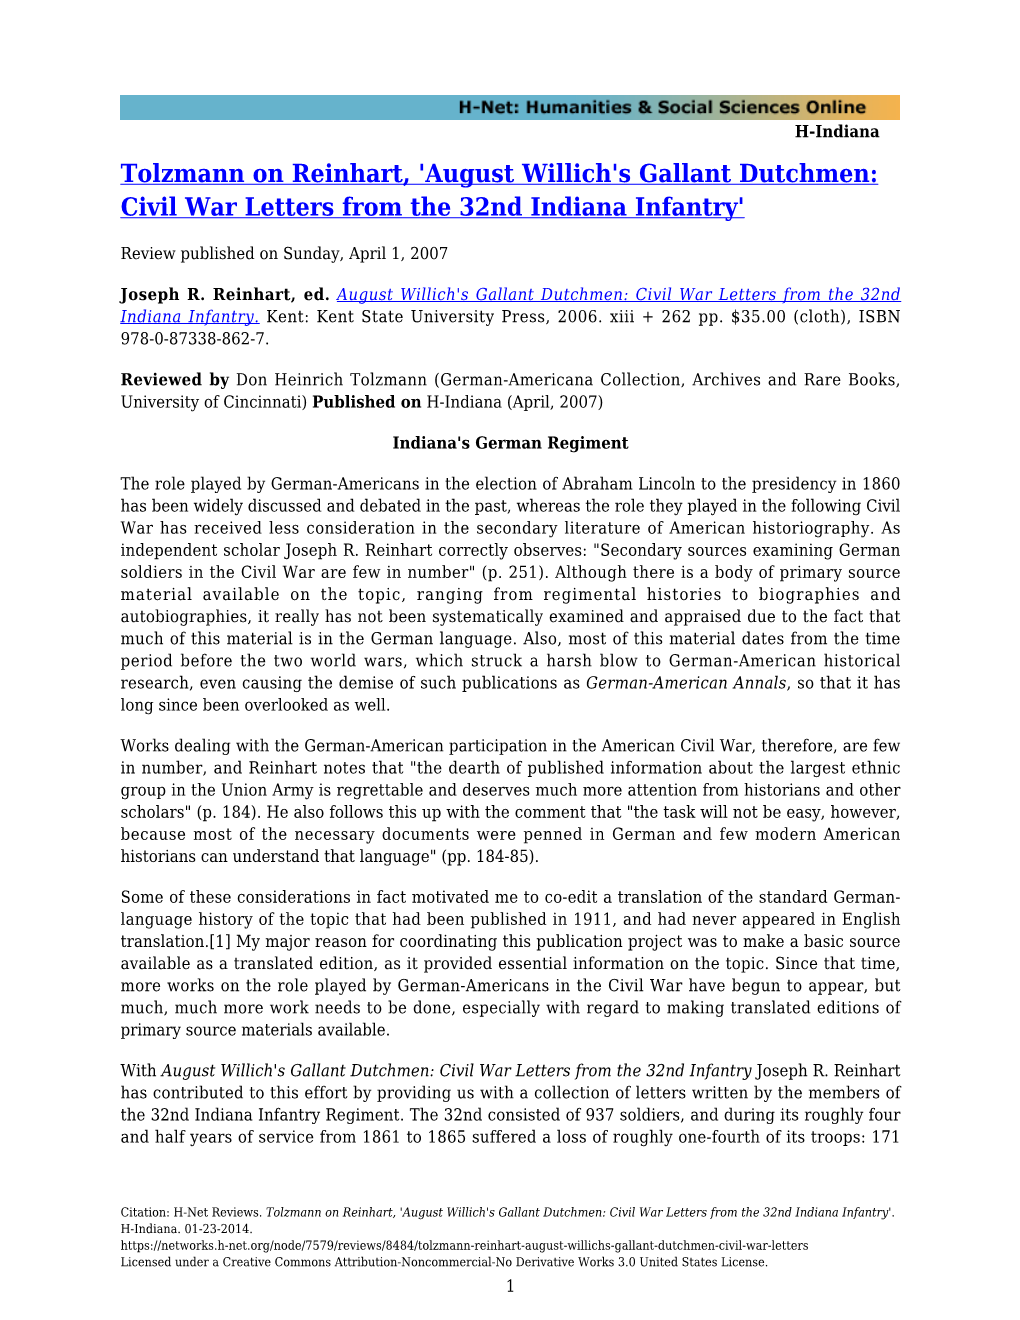 Tolzmann on Reinhart, 'August Willich's Gallant Dutchmen: Civil War Letters from the 32Nd Indiana Infantry'